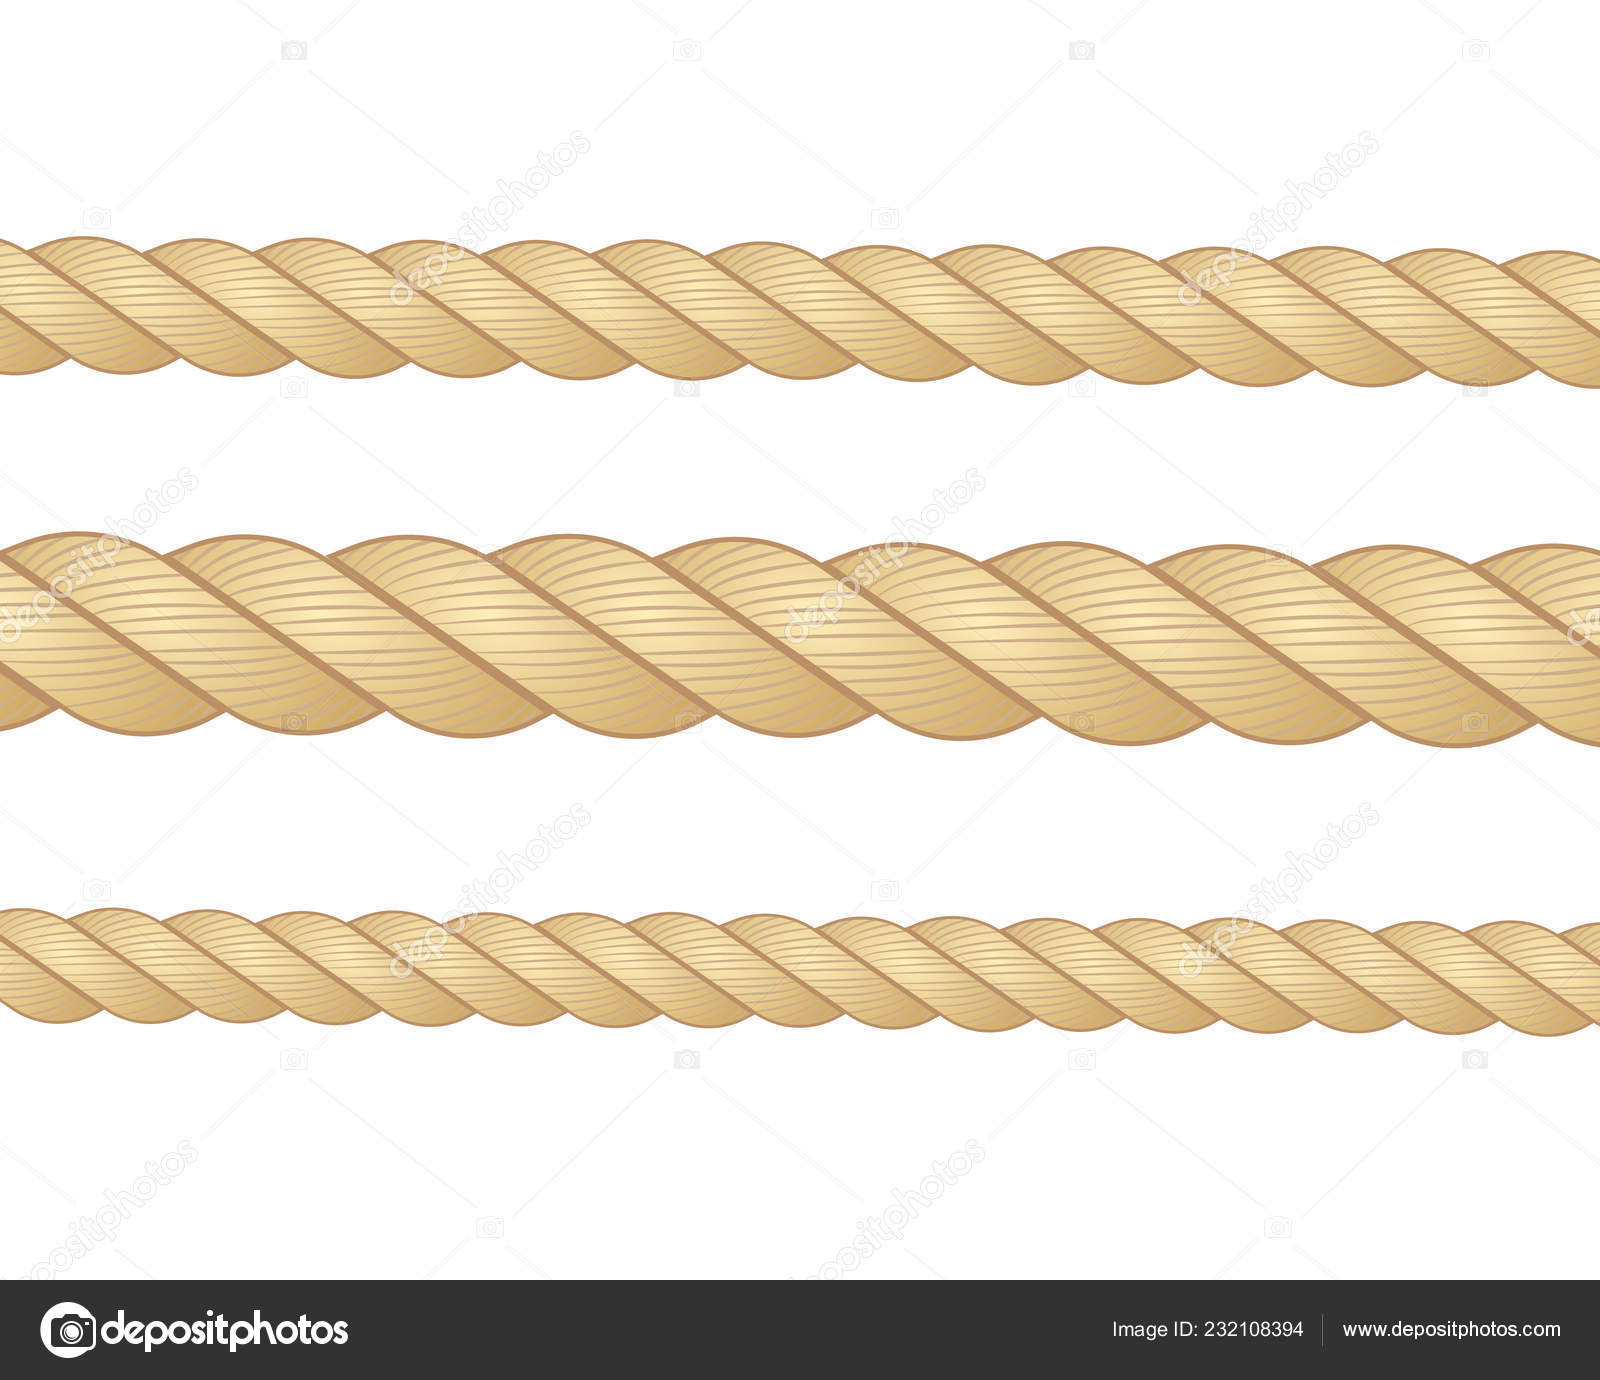 https://st4.depositphotos.com/8845334/23210/v/1600/depositphotos_232108394-stock-illustration-nautical-rope-square-rope-frames.jpg